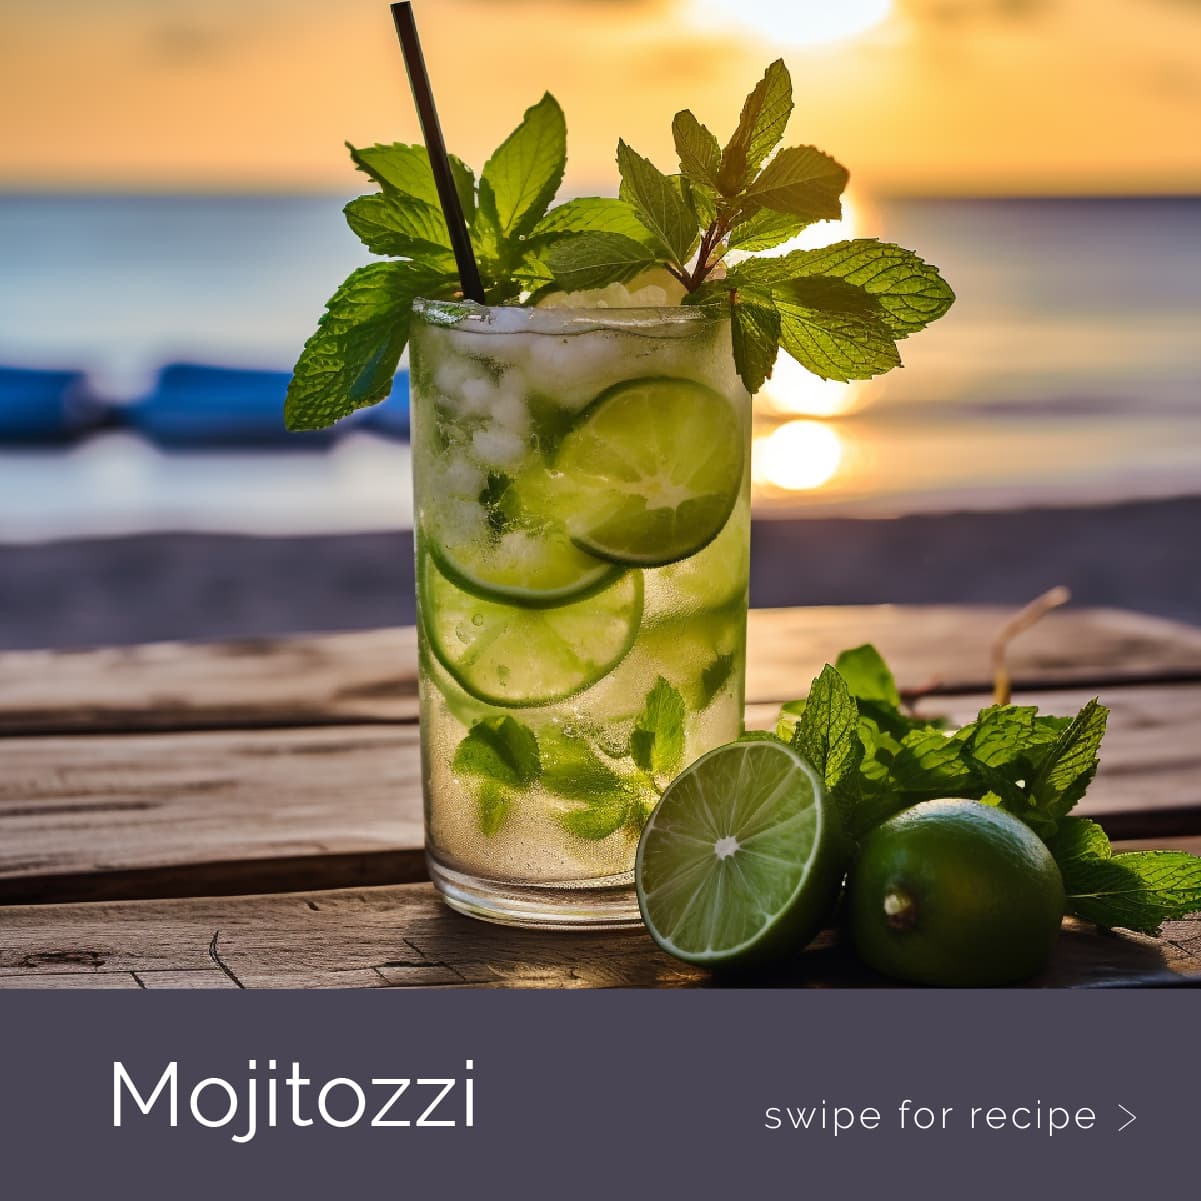 A Mojitozzi cocktail